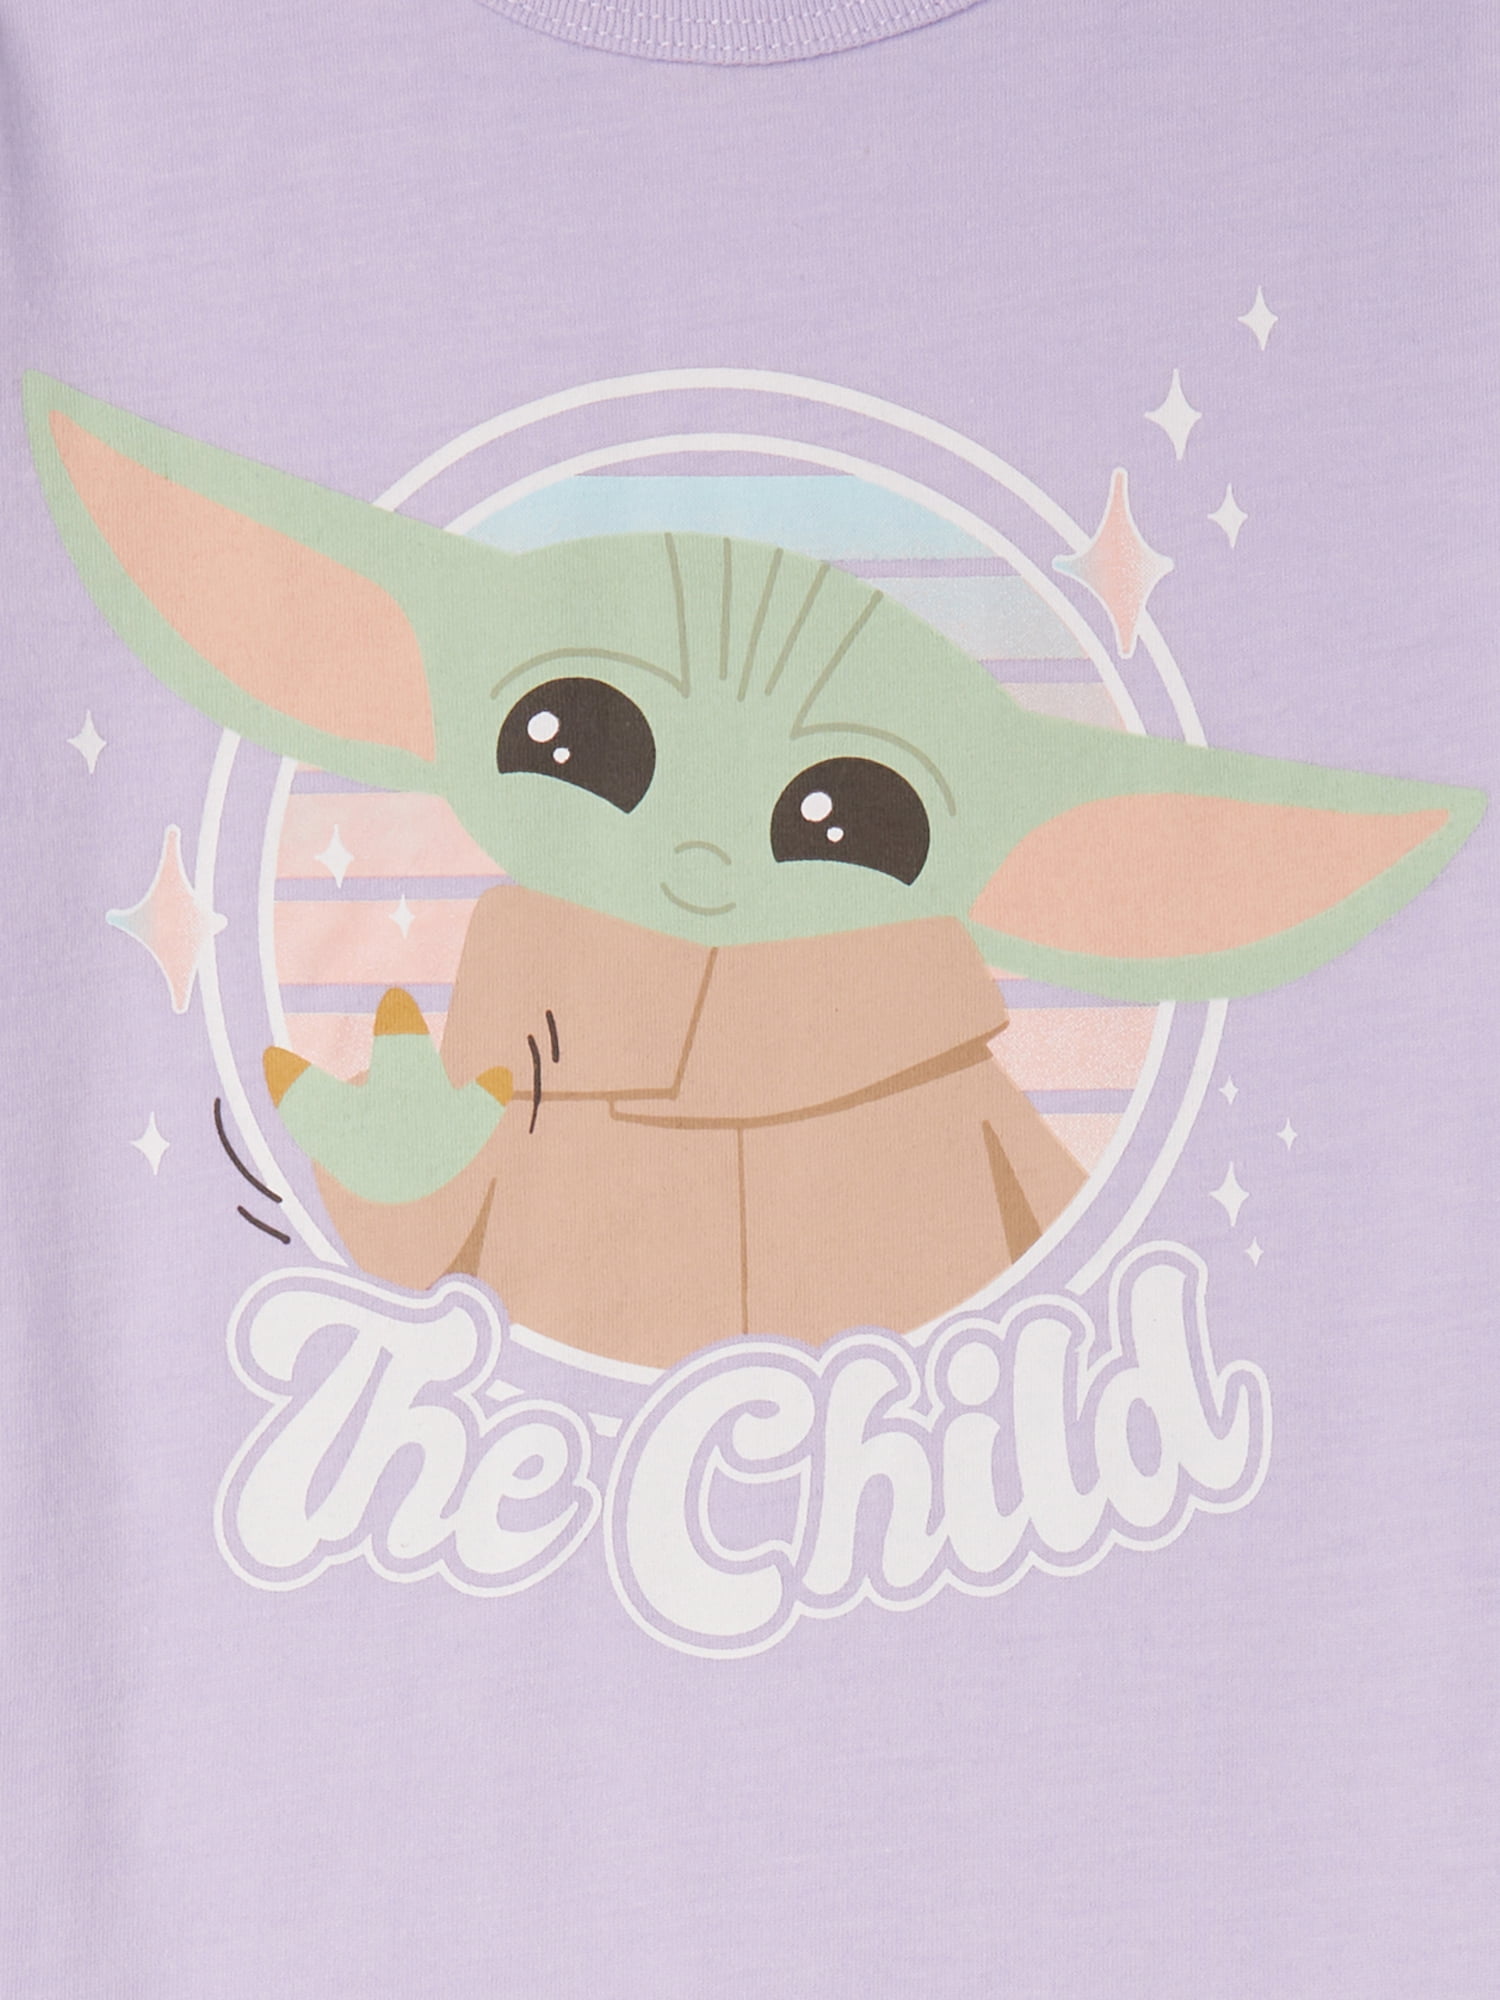 Star Wars The Mandalorian Baby Yoda Baby & Toddler Girls Graphic Print T- Shirts, 3-Pack, Sizes 12M-5T